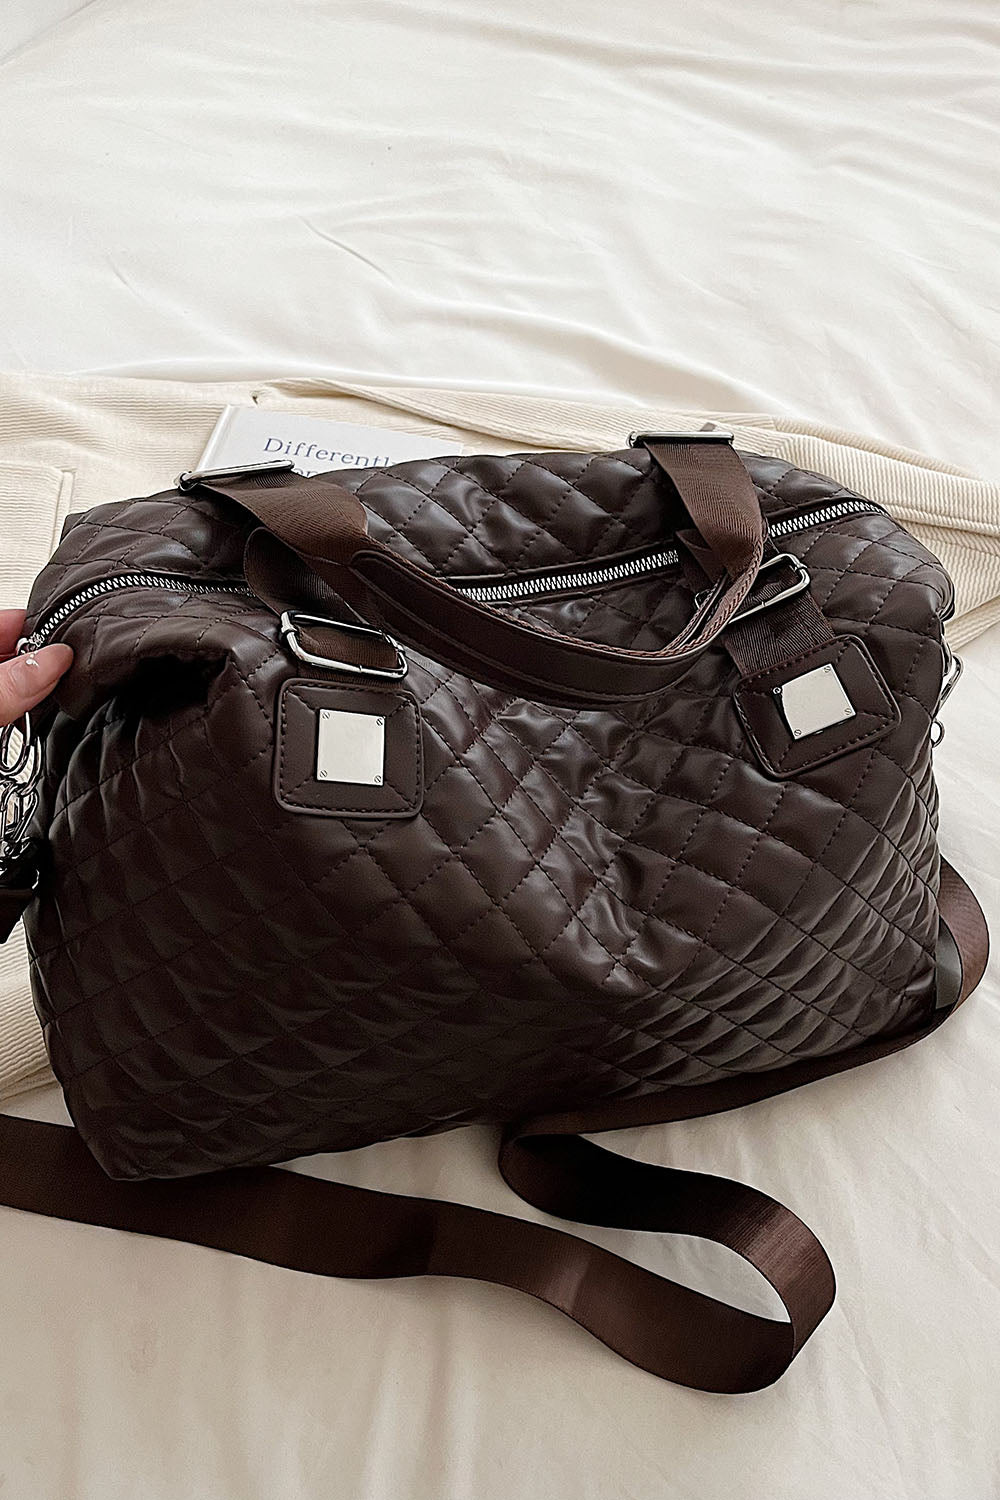 PU Leather Handbag - Fashion Girl Online Store